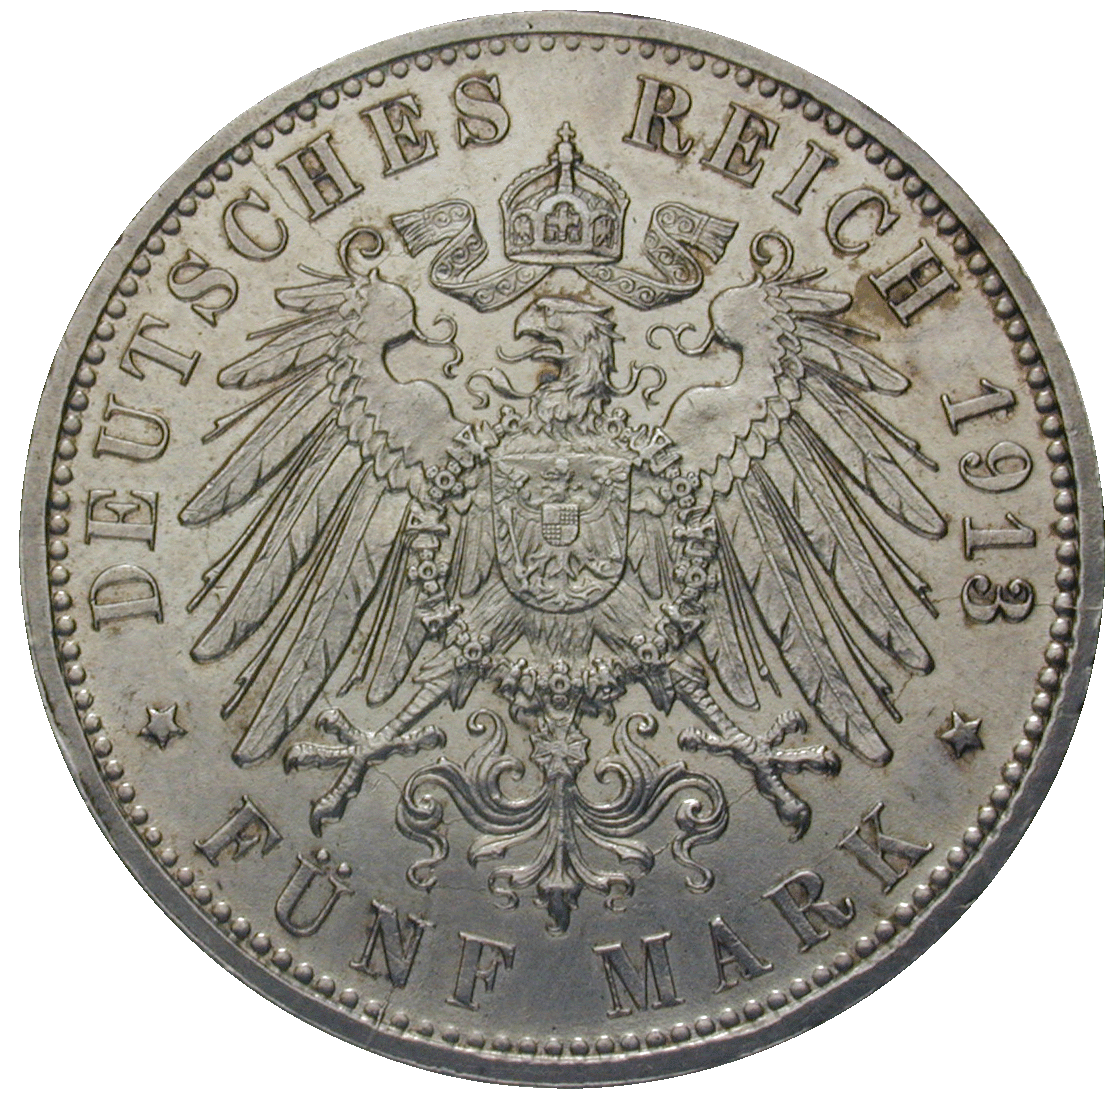 German Empire, Wilhelm II, Free Hanseatic City of Hamburg, 5 Mark 1913 (reverse)